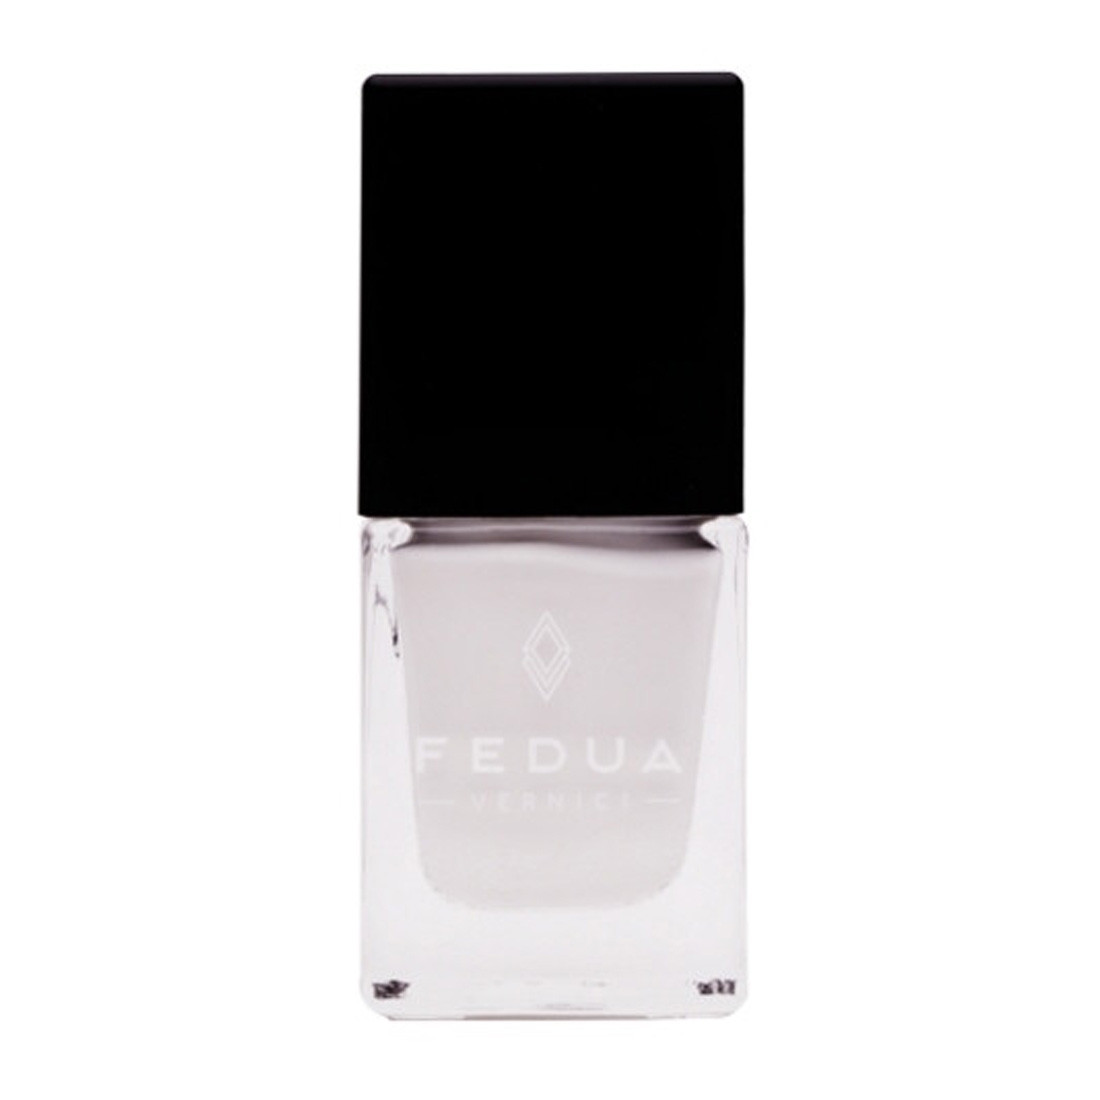 Fedua Confezione Base Water White - Лак для ногтей Прозрачно-белый